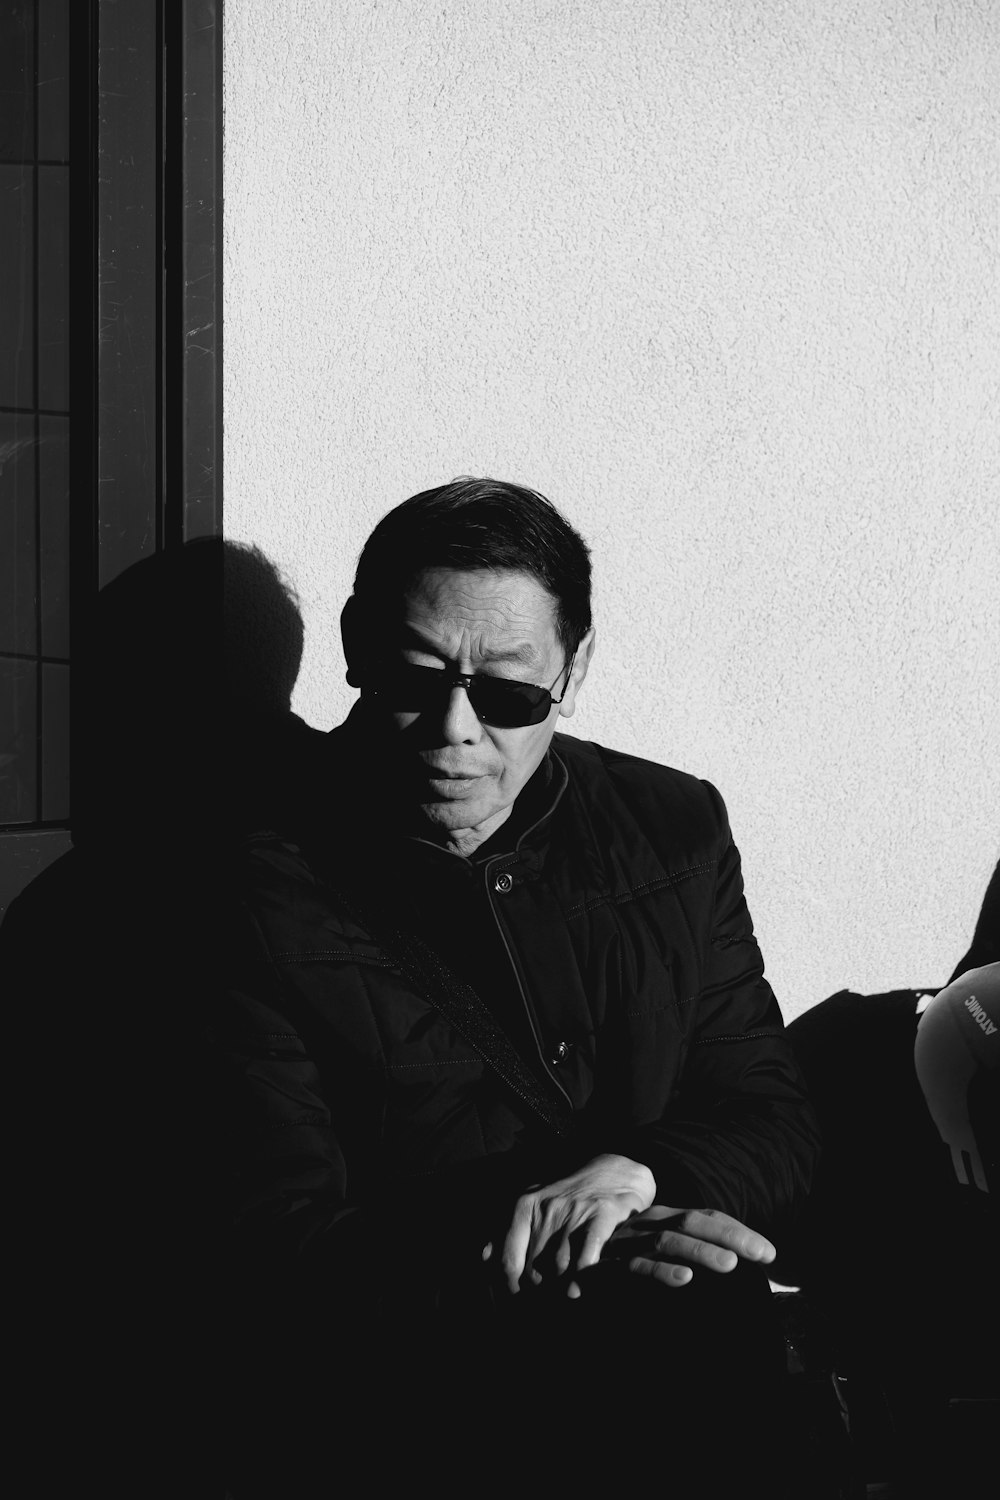 man in black jacket wearing sunglasses